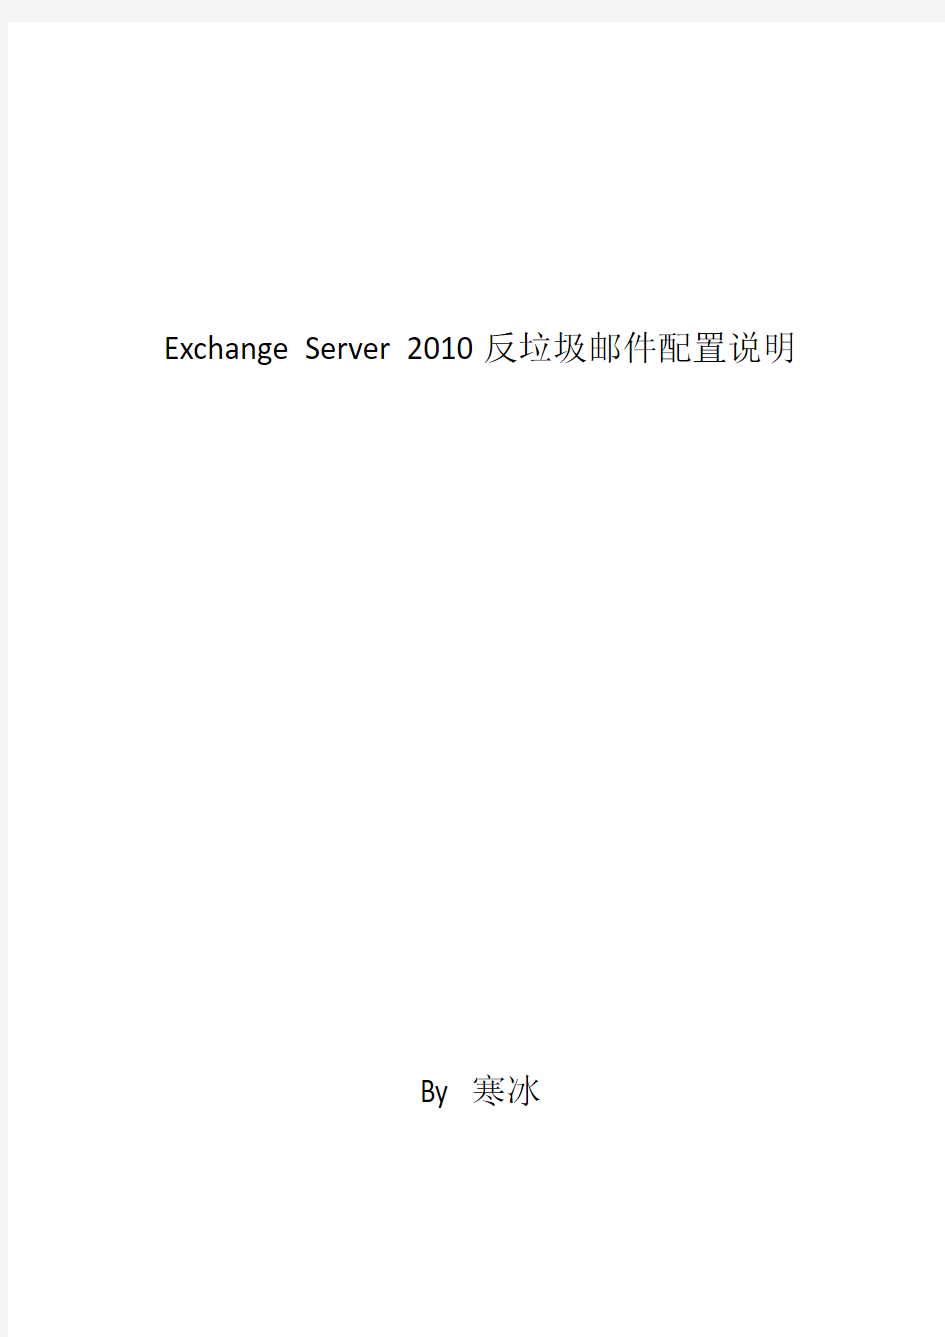 Exchange Server 2010反垃圾邮件说明